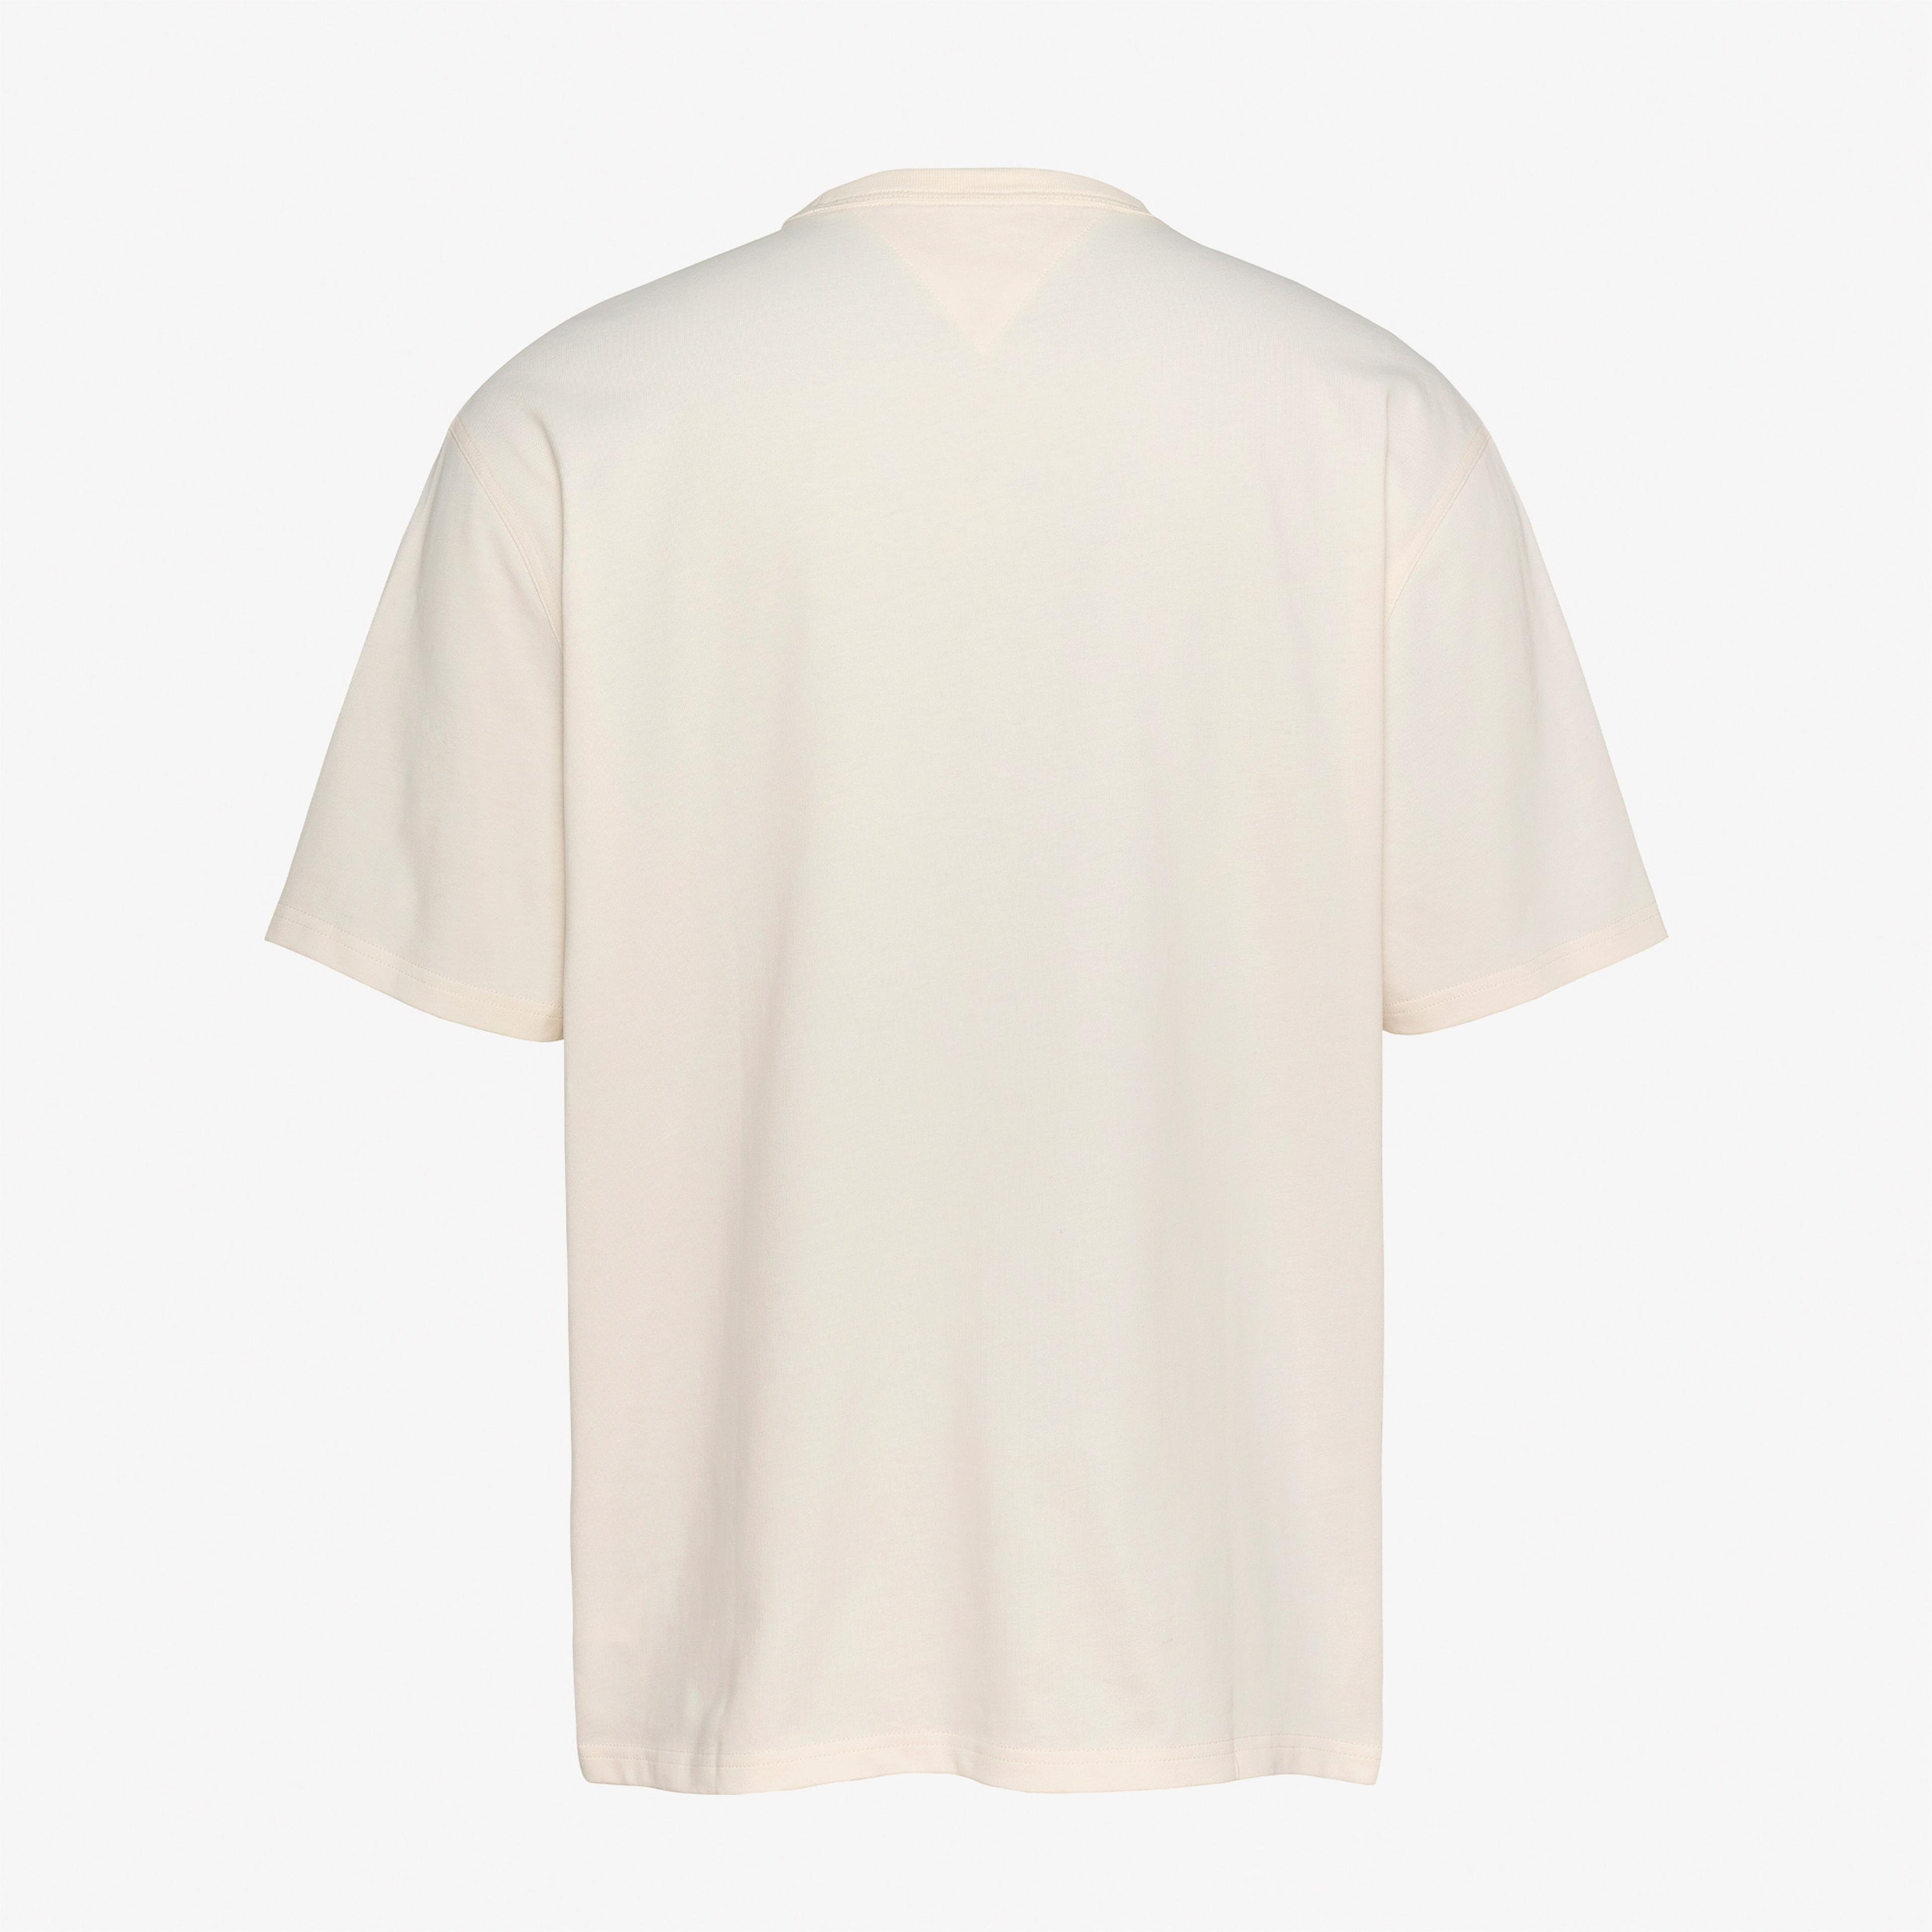 Tommy Jeans Ovz Luxe Serif Tj Ny Erkek Beyaz T-Shirt